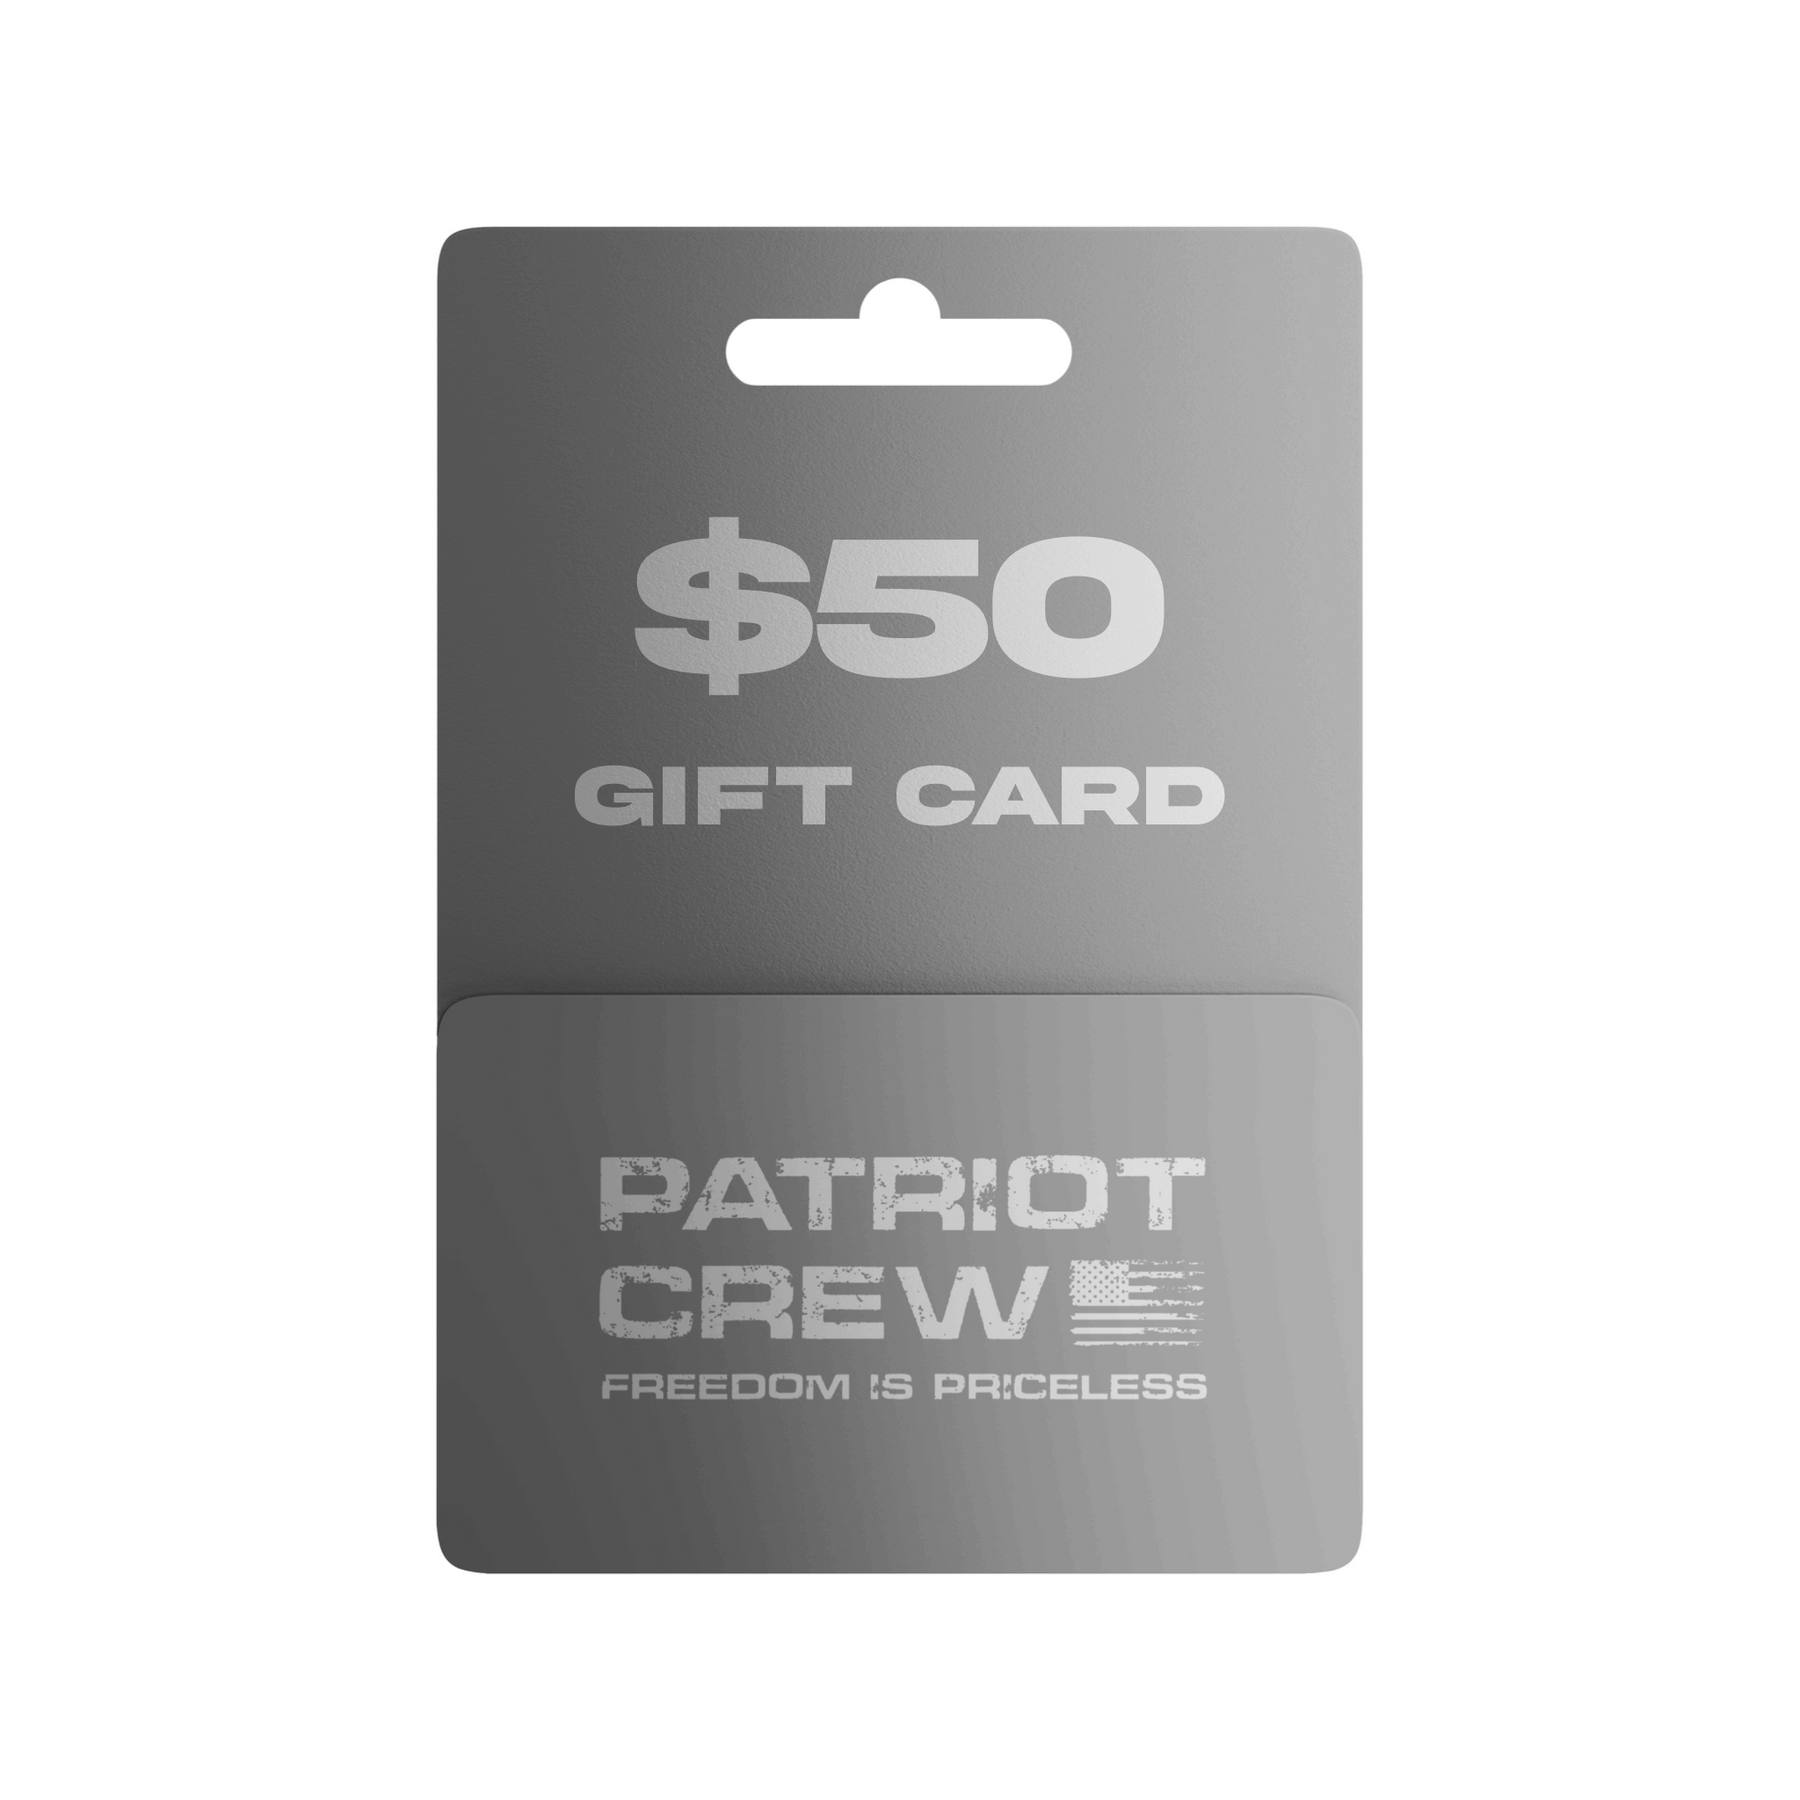 Patriot Crew Gift Card